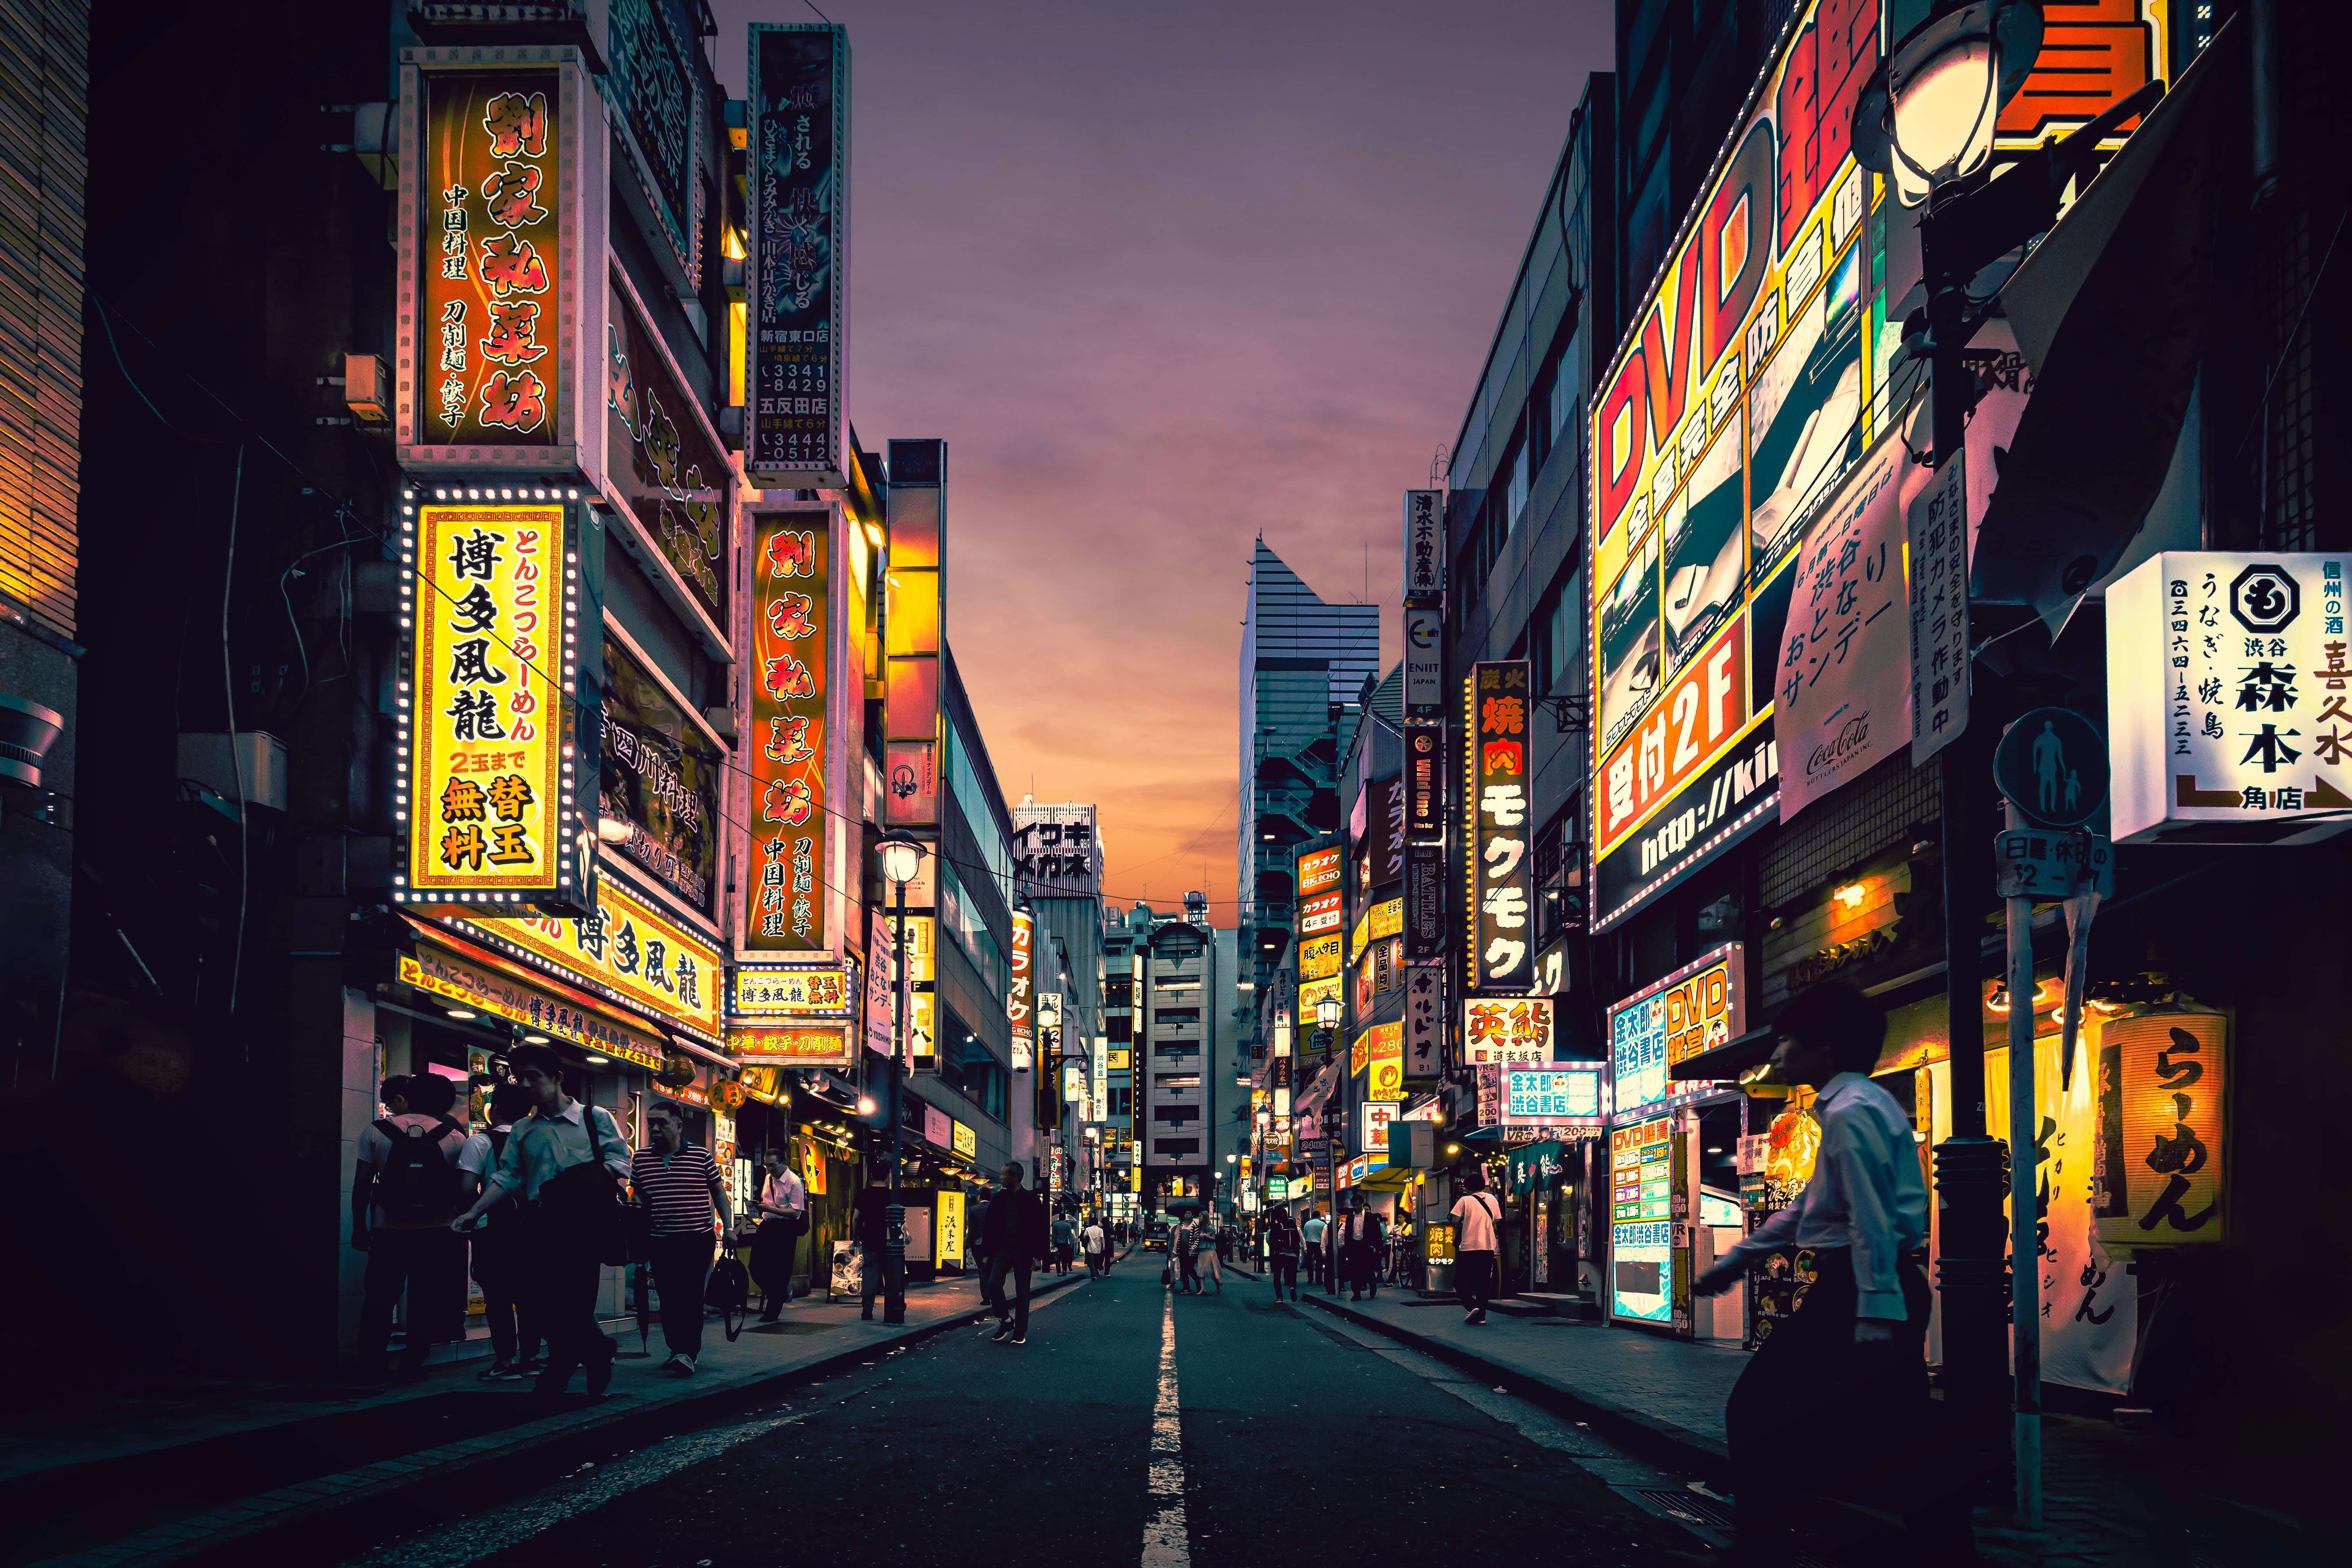 A Tokyo street scene at sunset